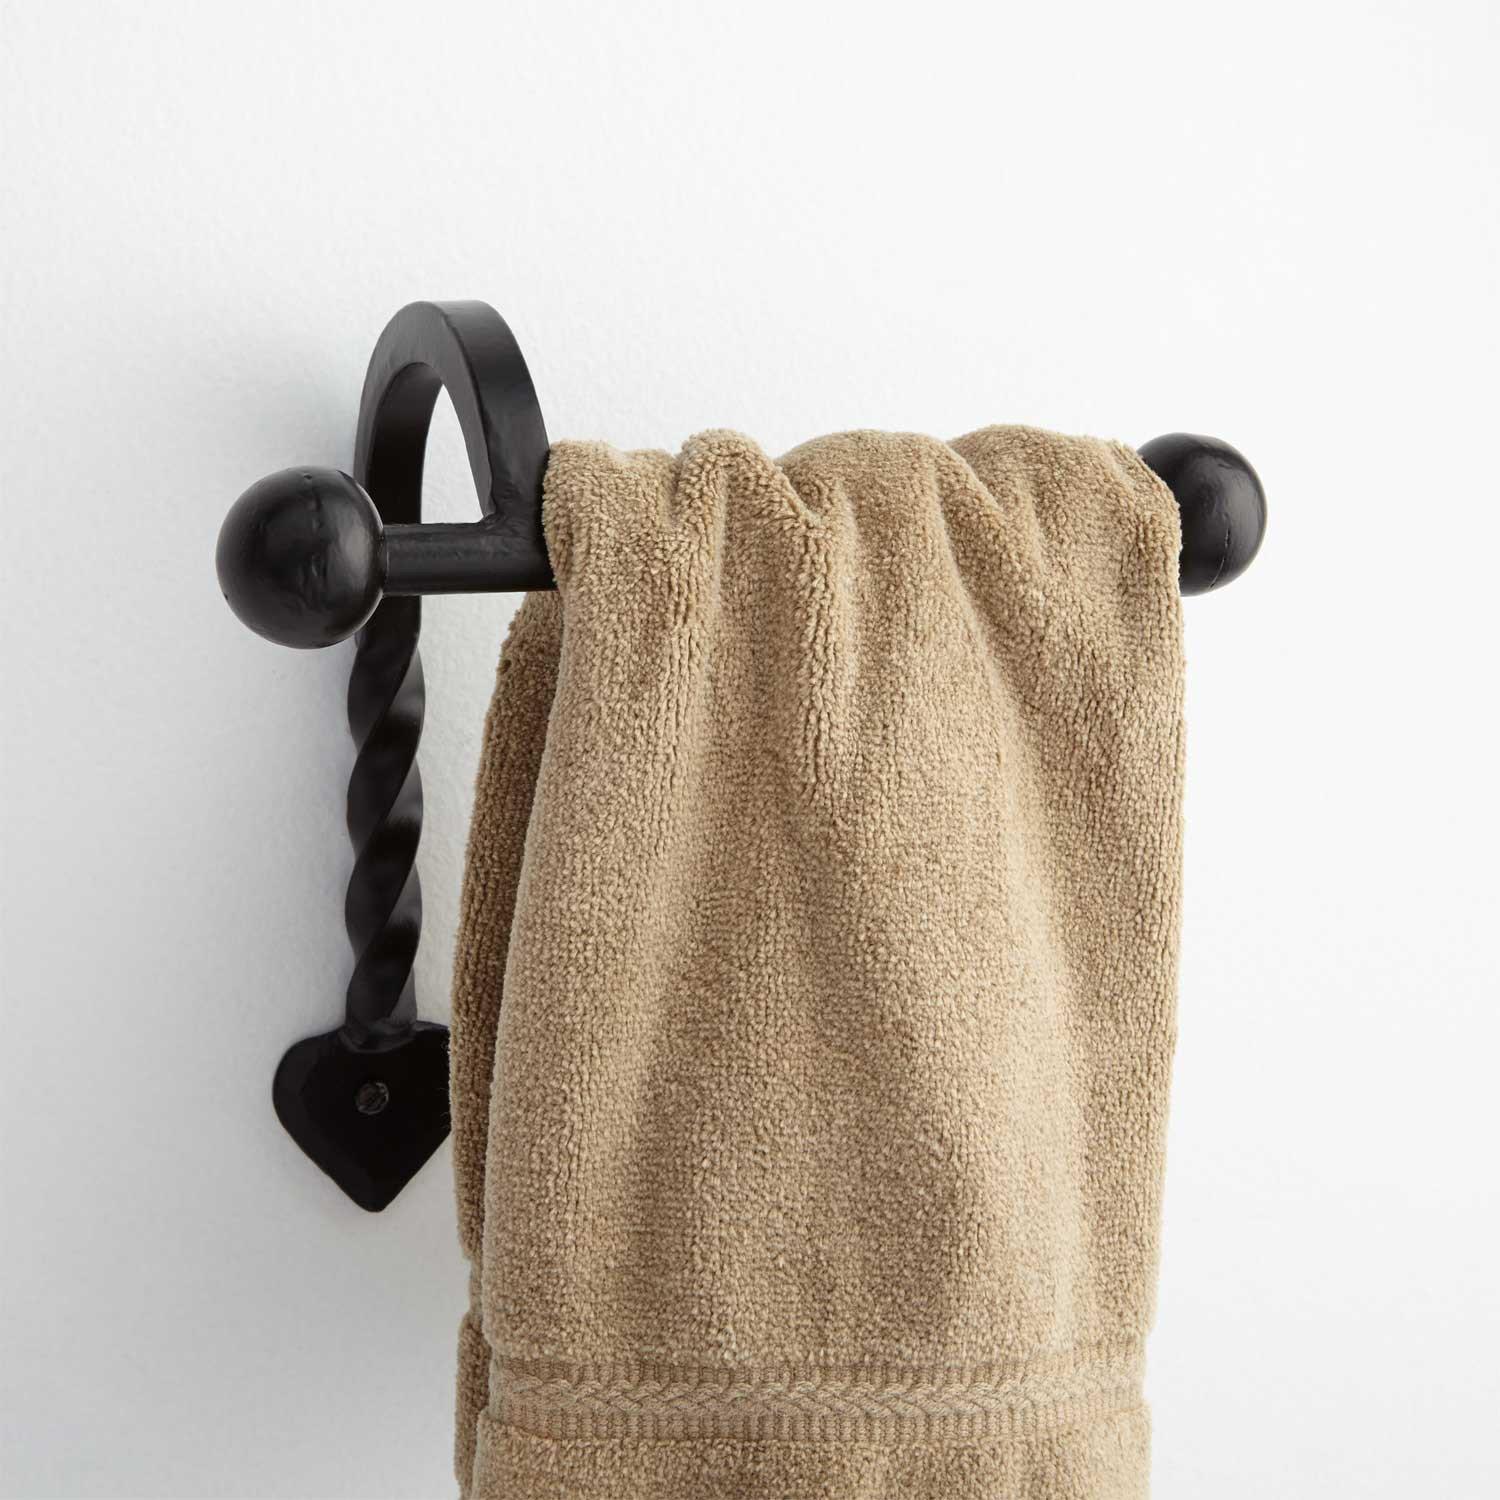 GIMILI gimli 2 pack 4 piece bathroom accessories set matte black (towel bar,  hand towel holder